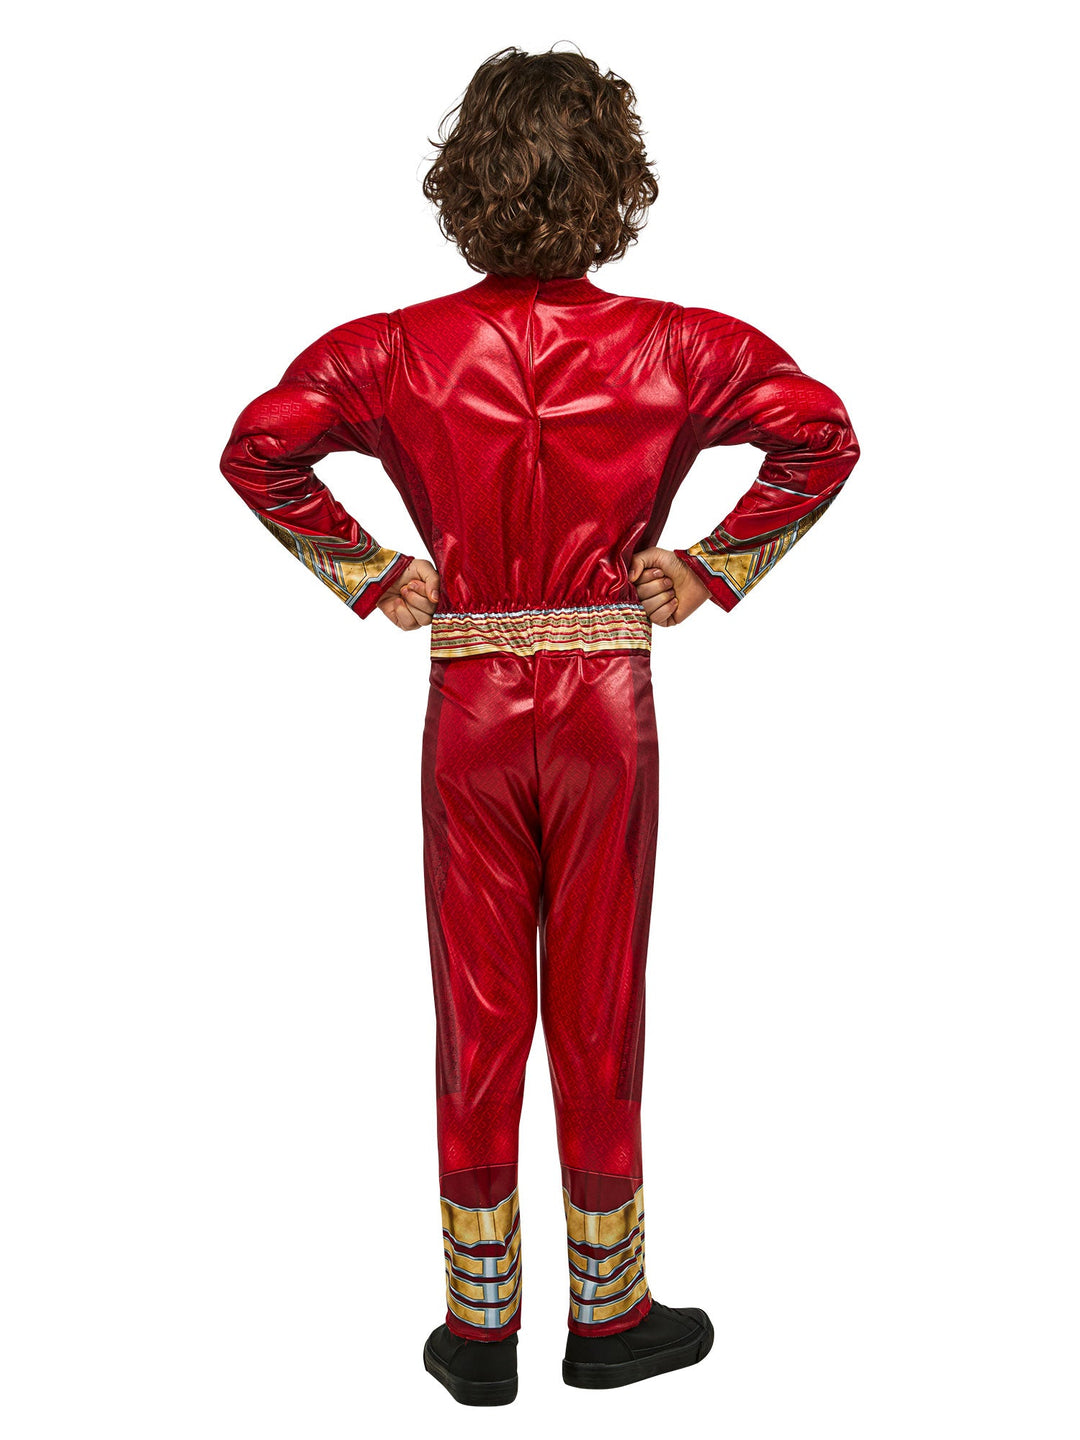 Shazam Fury of the Gods Boys Red Muscle Costume